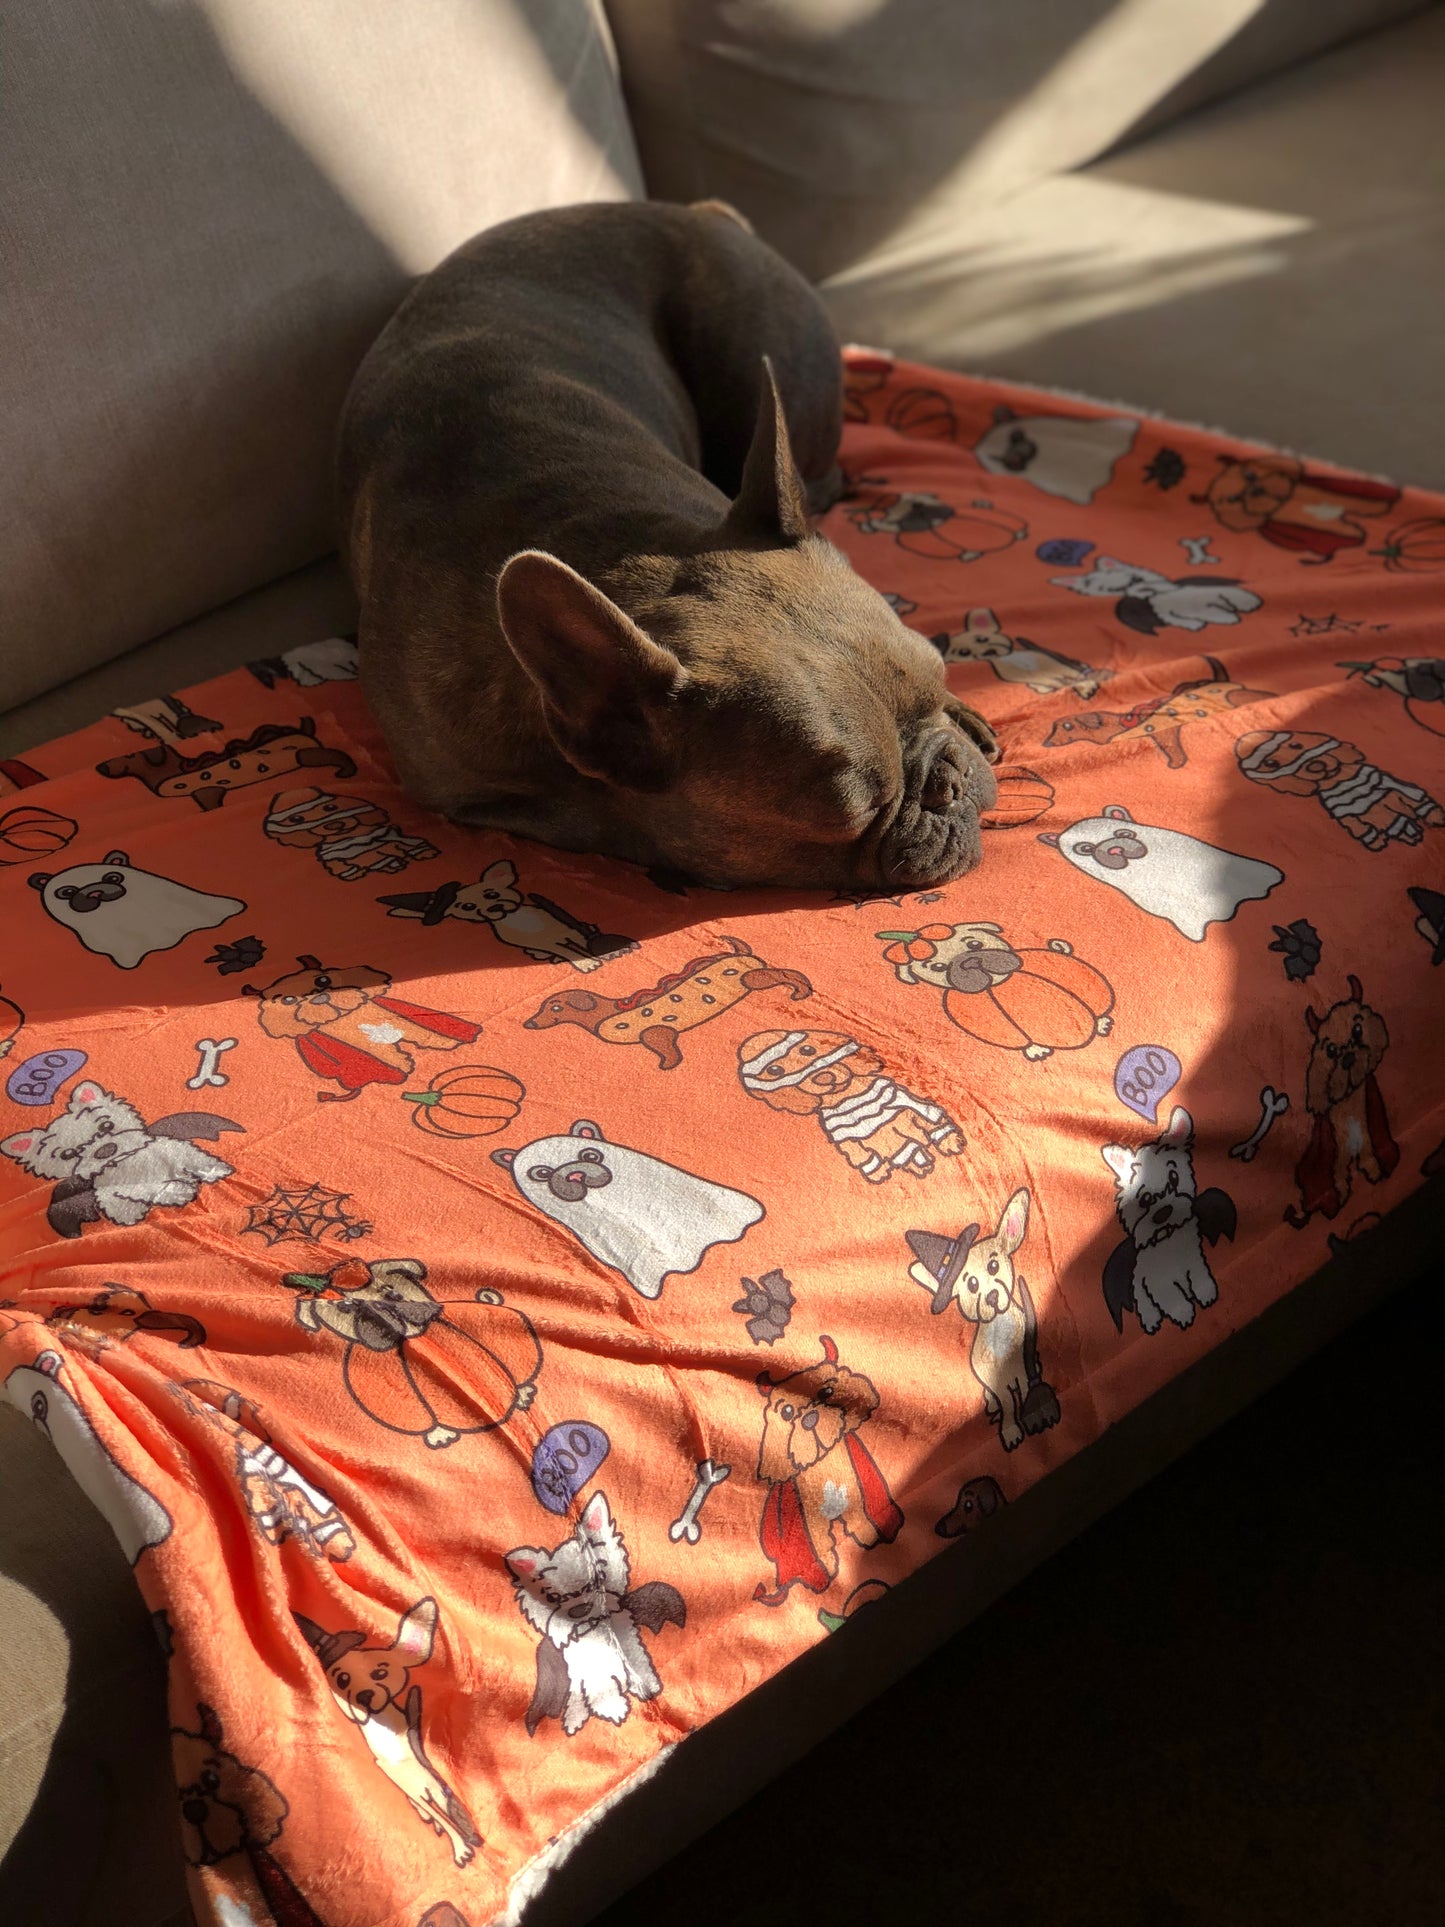 The Happy Howloween Dog Blanket